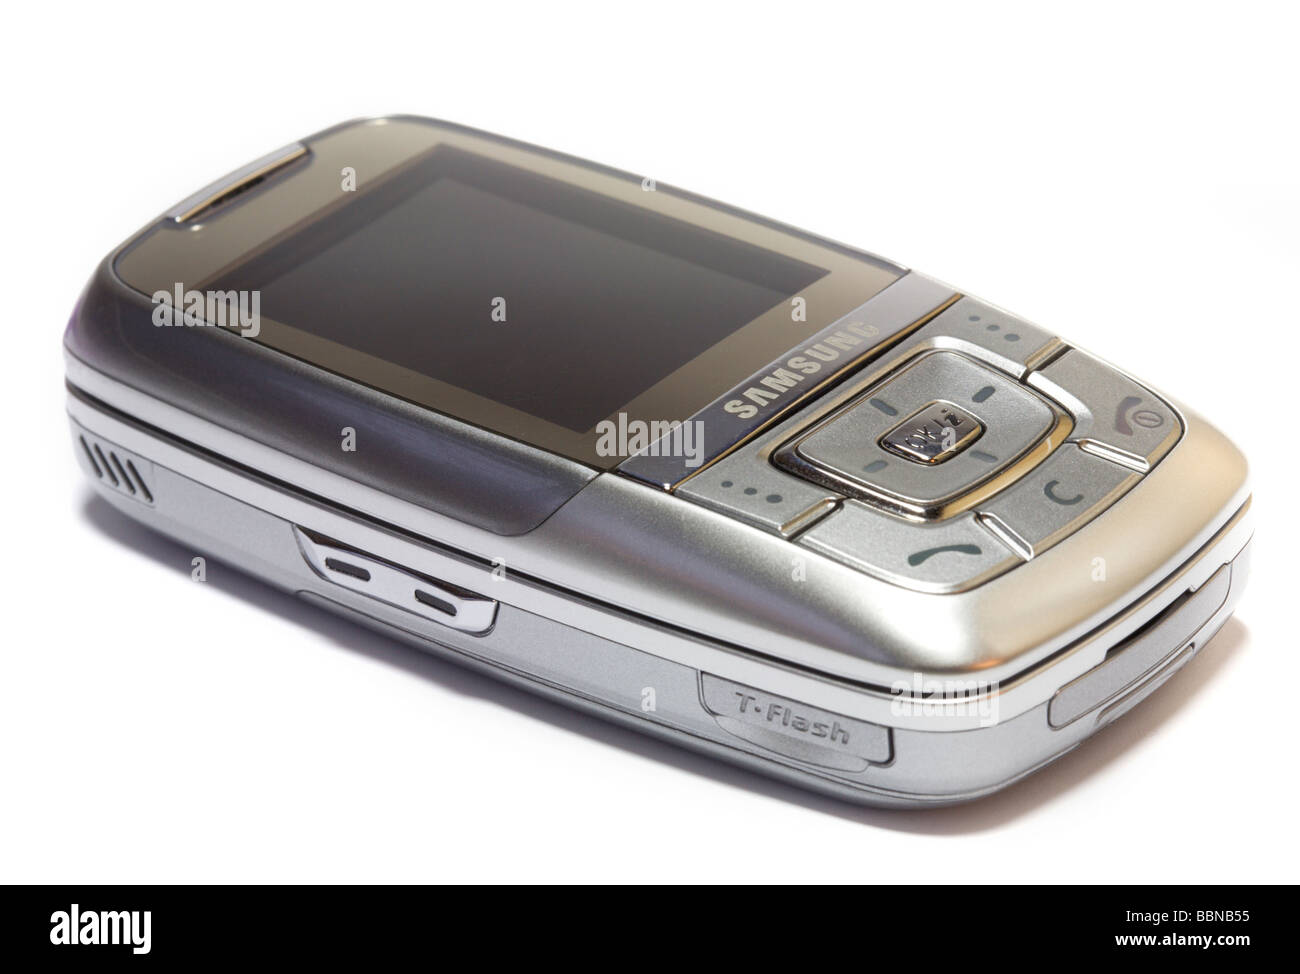 Samsung D600 Mobile Phone Stock Photo - Alamy